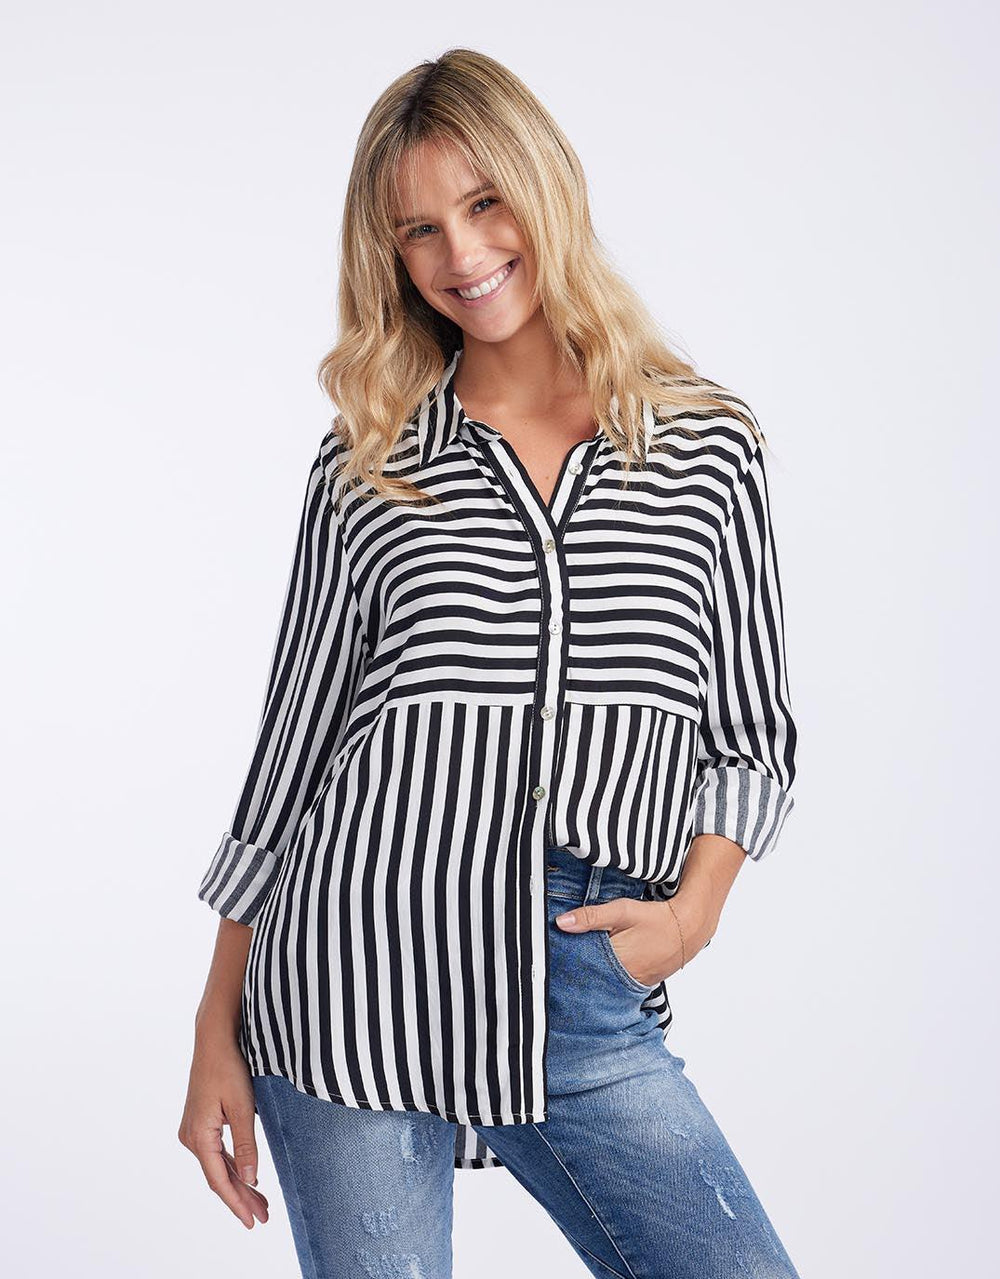 Threadz - Tina Stripe Shirt - Black/White - paulaglazebrook Tops